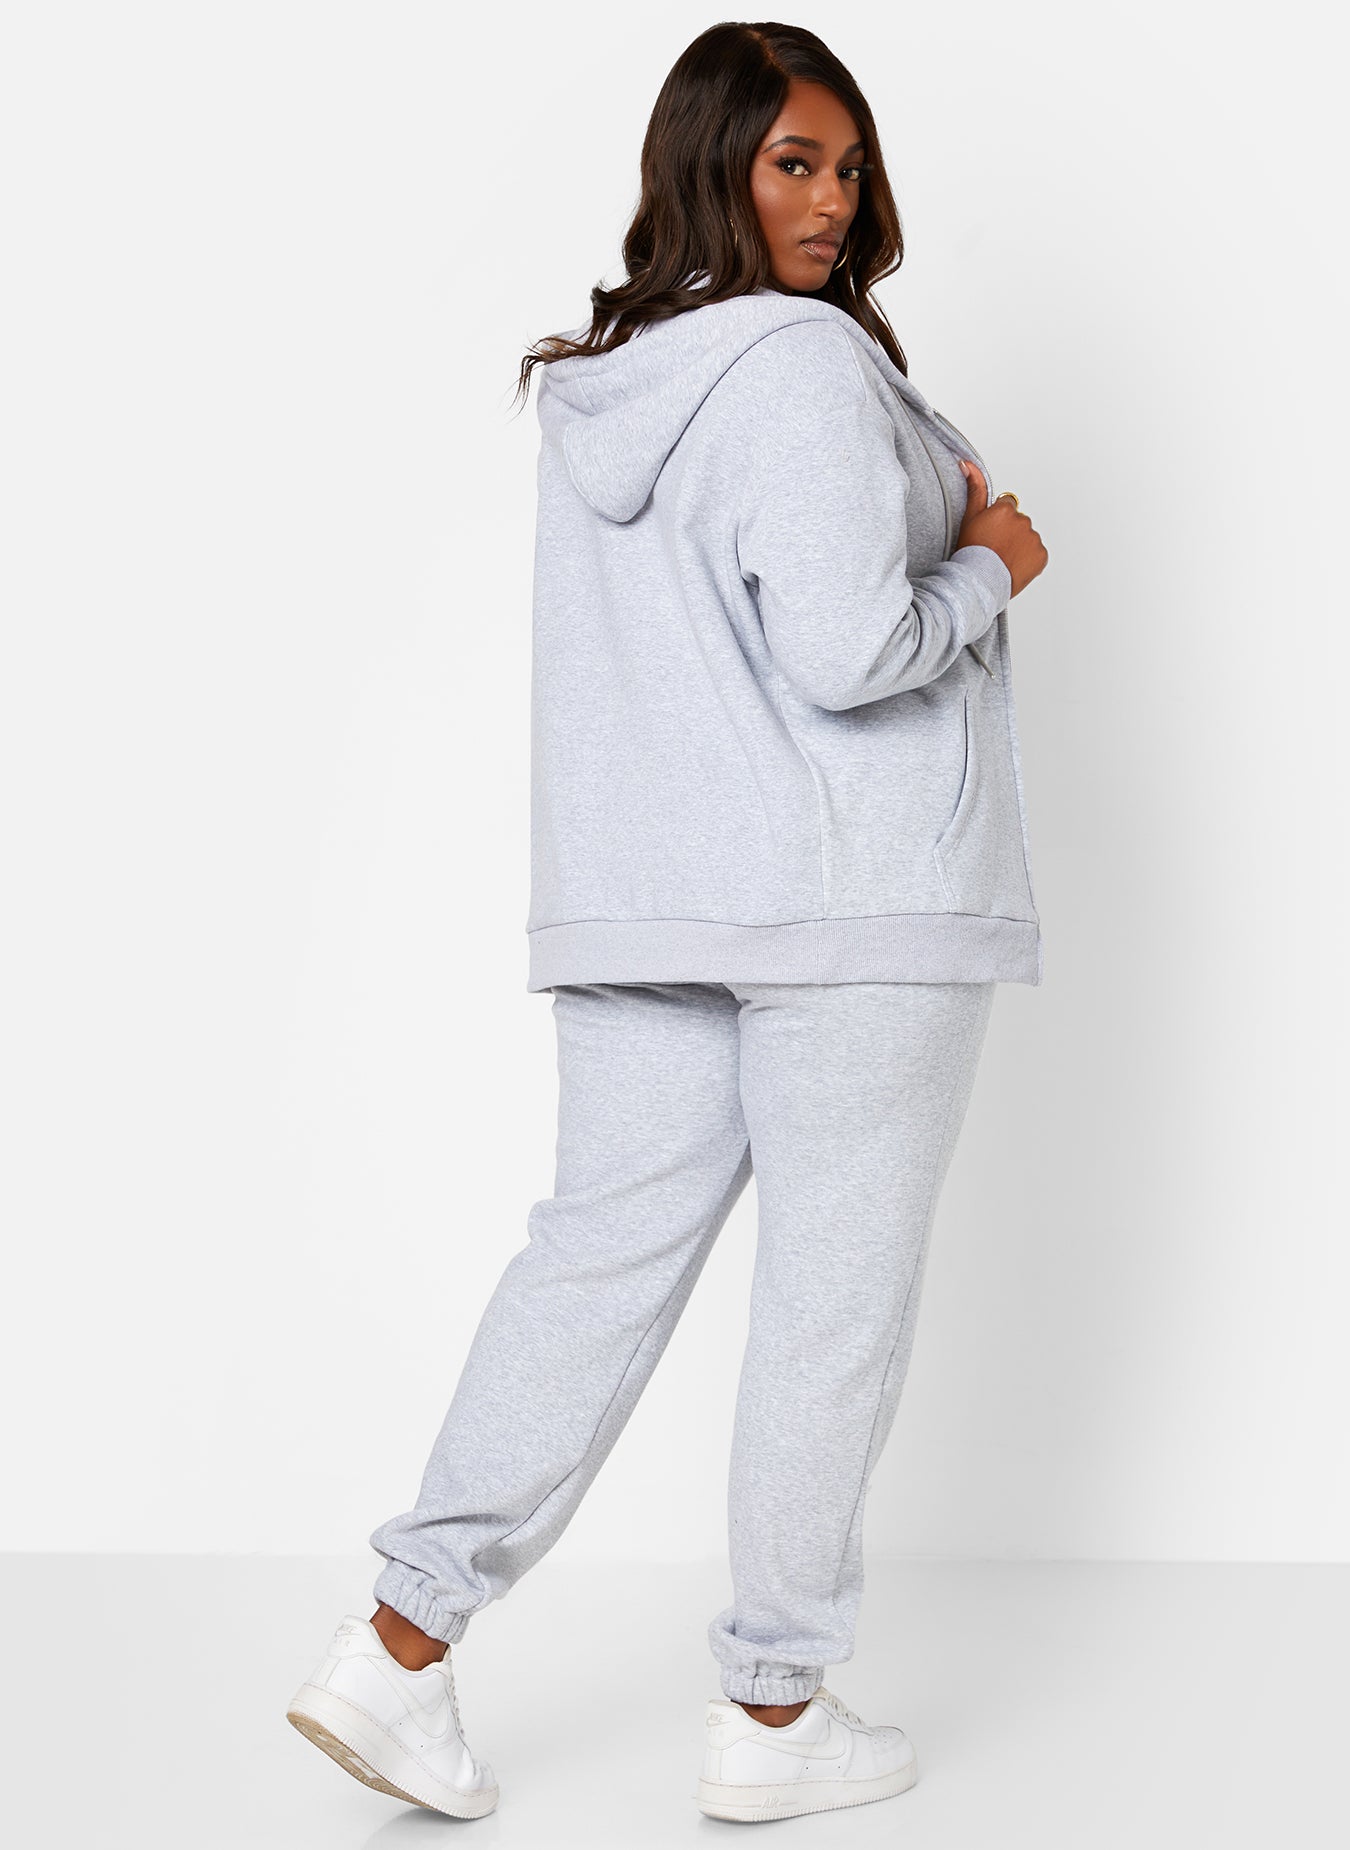 Heather Gray Goals Embroidered Oversized Zip Up Sweatshirt Plus Sizes